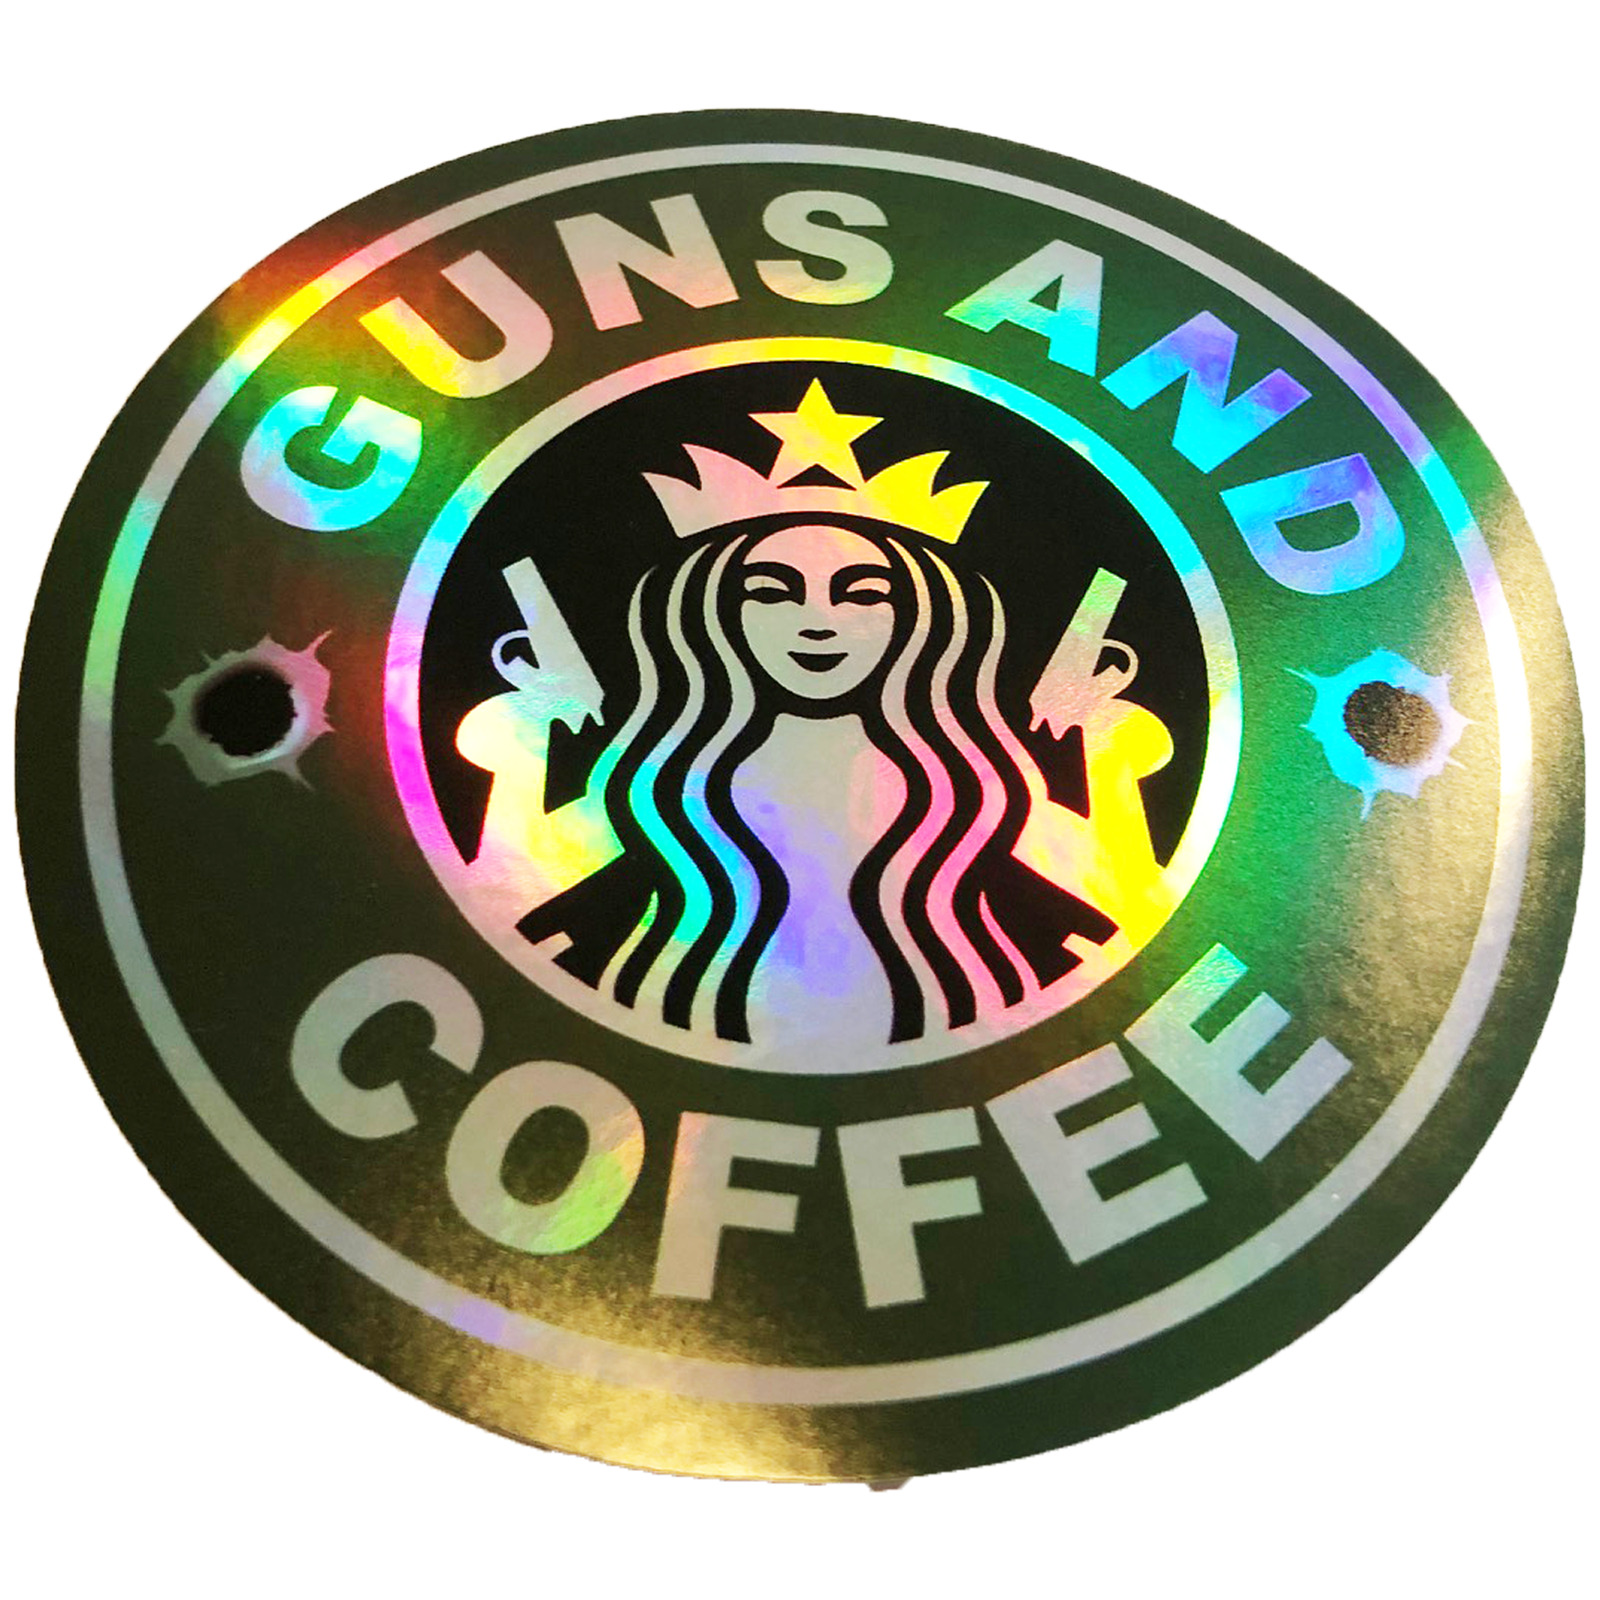 Shiny Guns and Coffee NRA Second Amendment Sticker Laptop Bumper Reflective